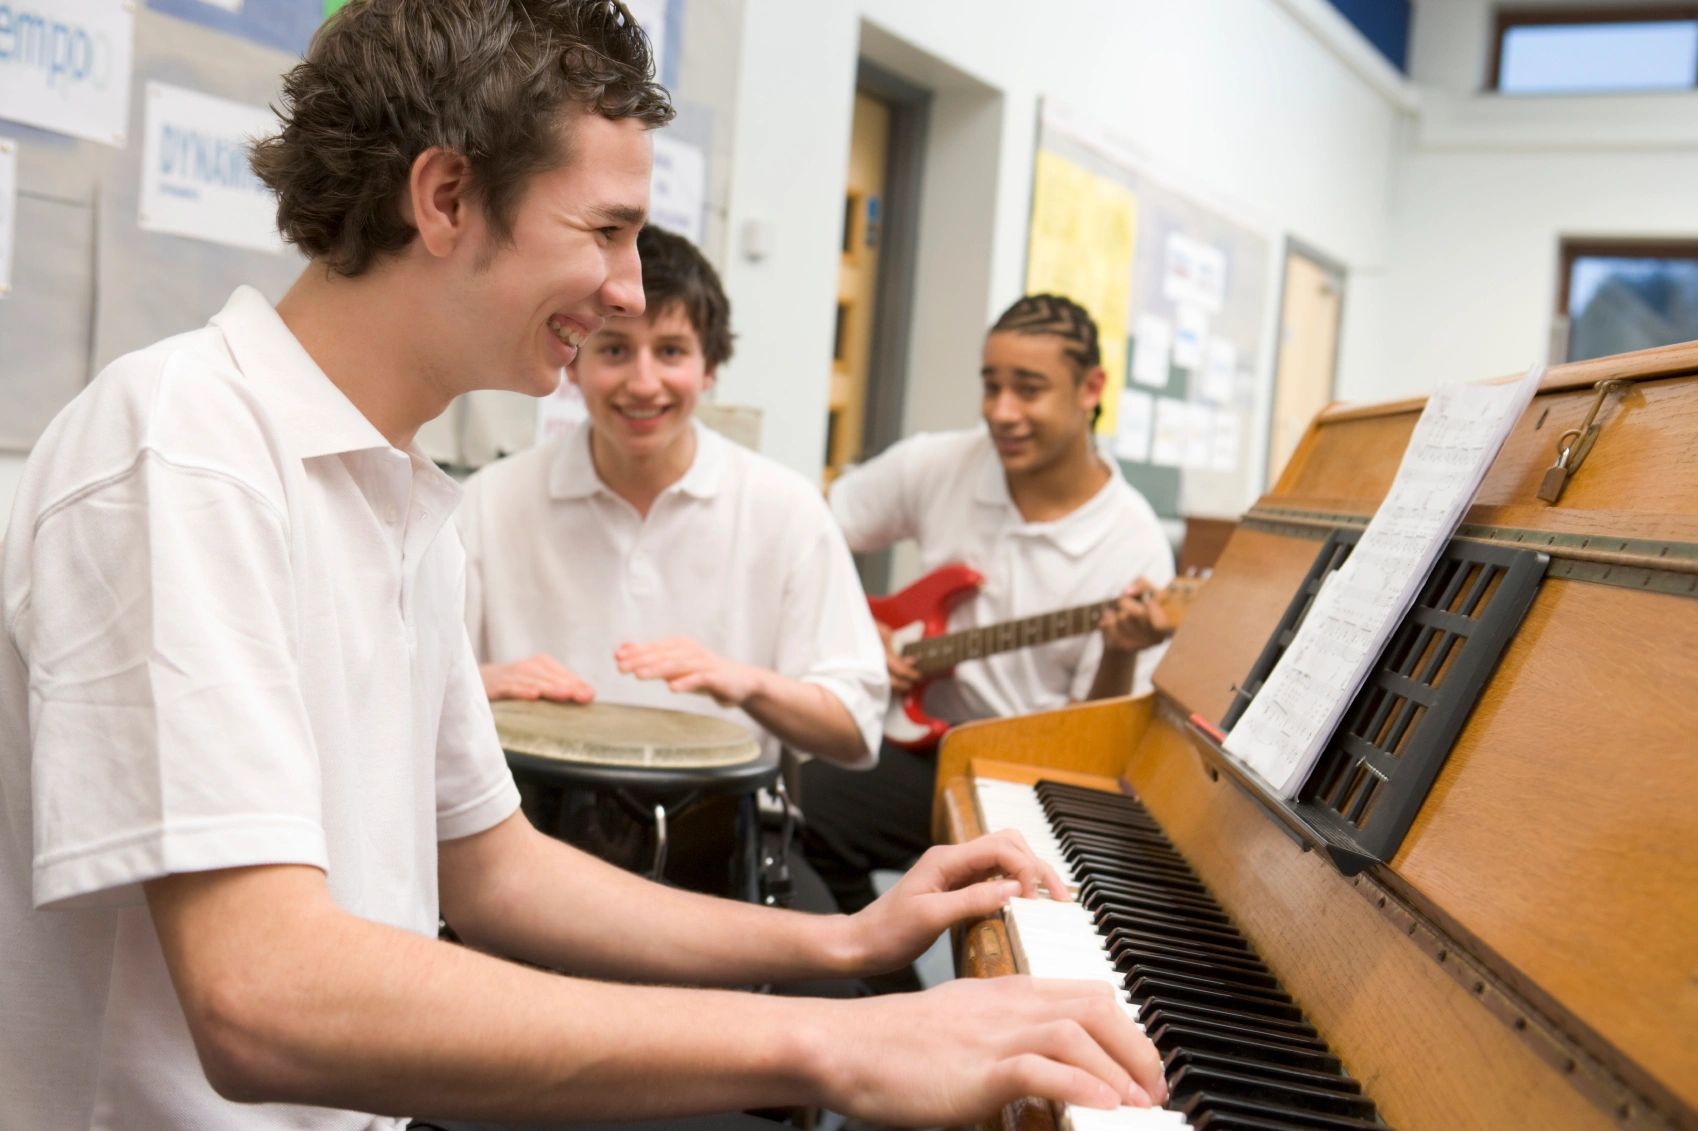 Three highschool boys playing instruments in a classroom.